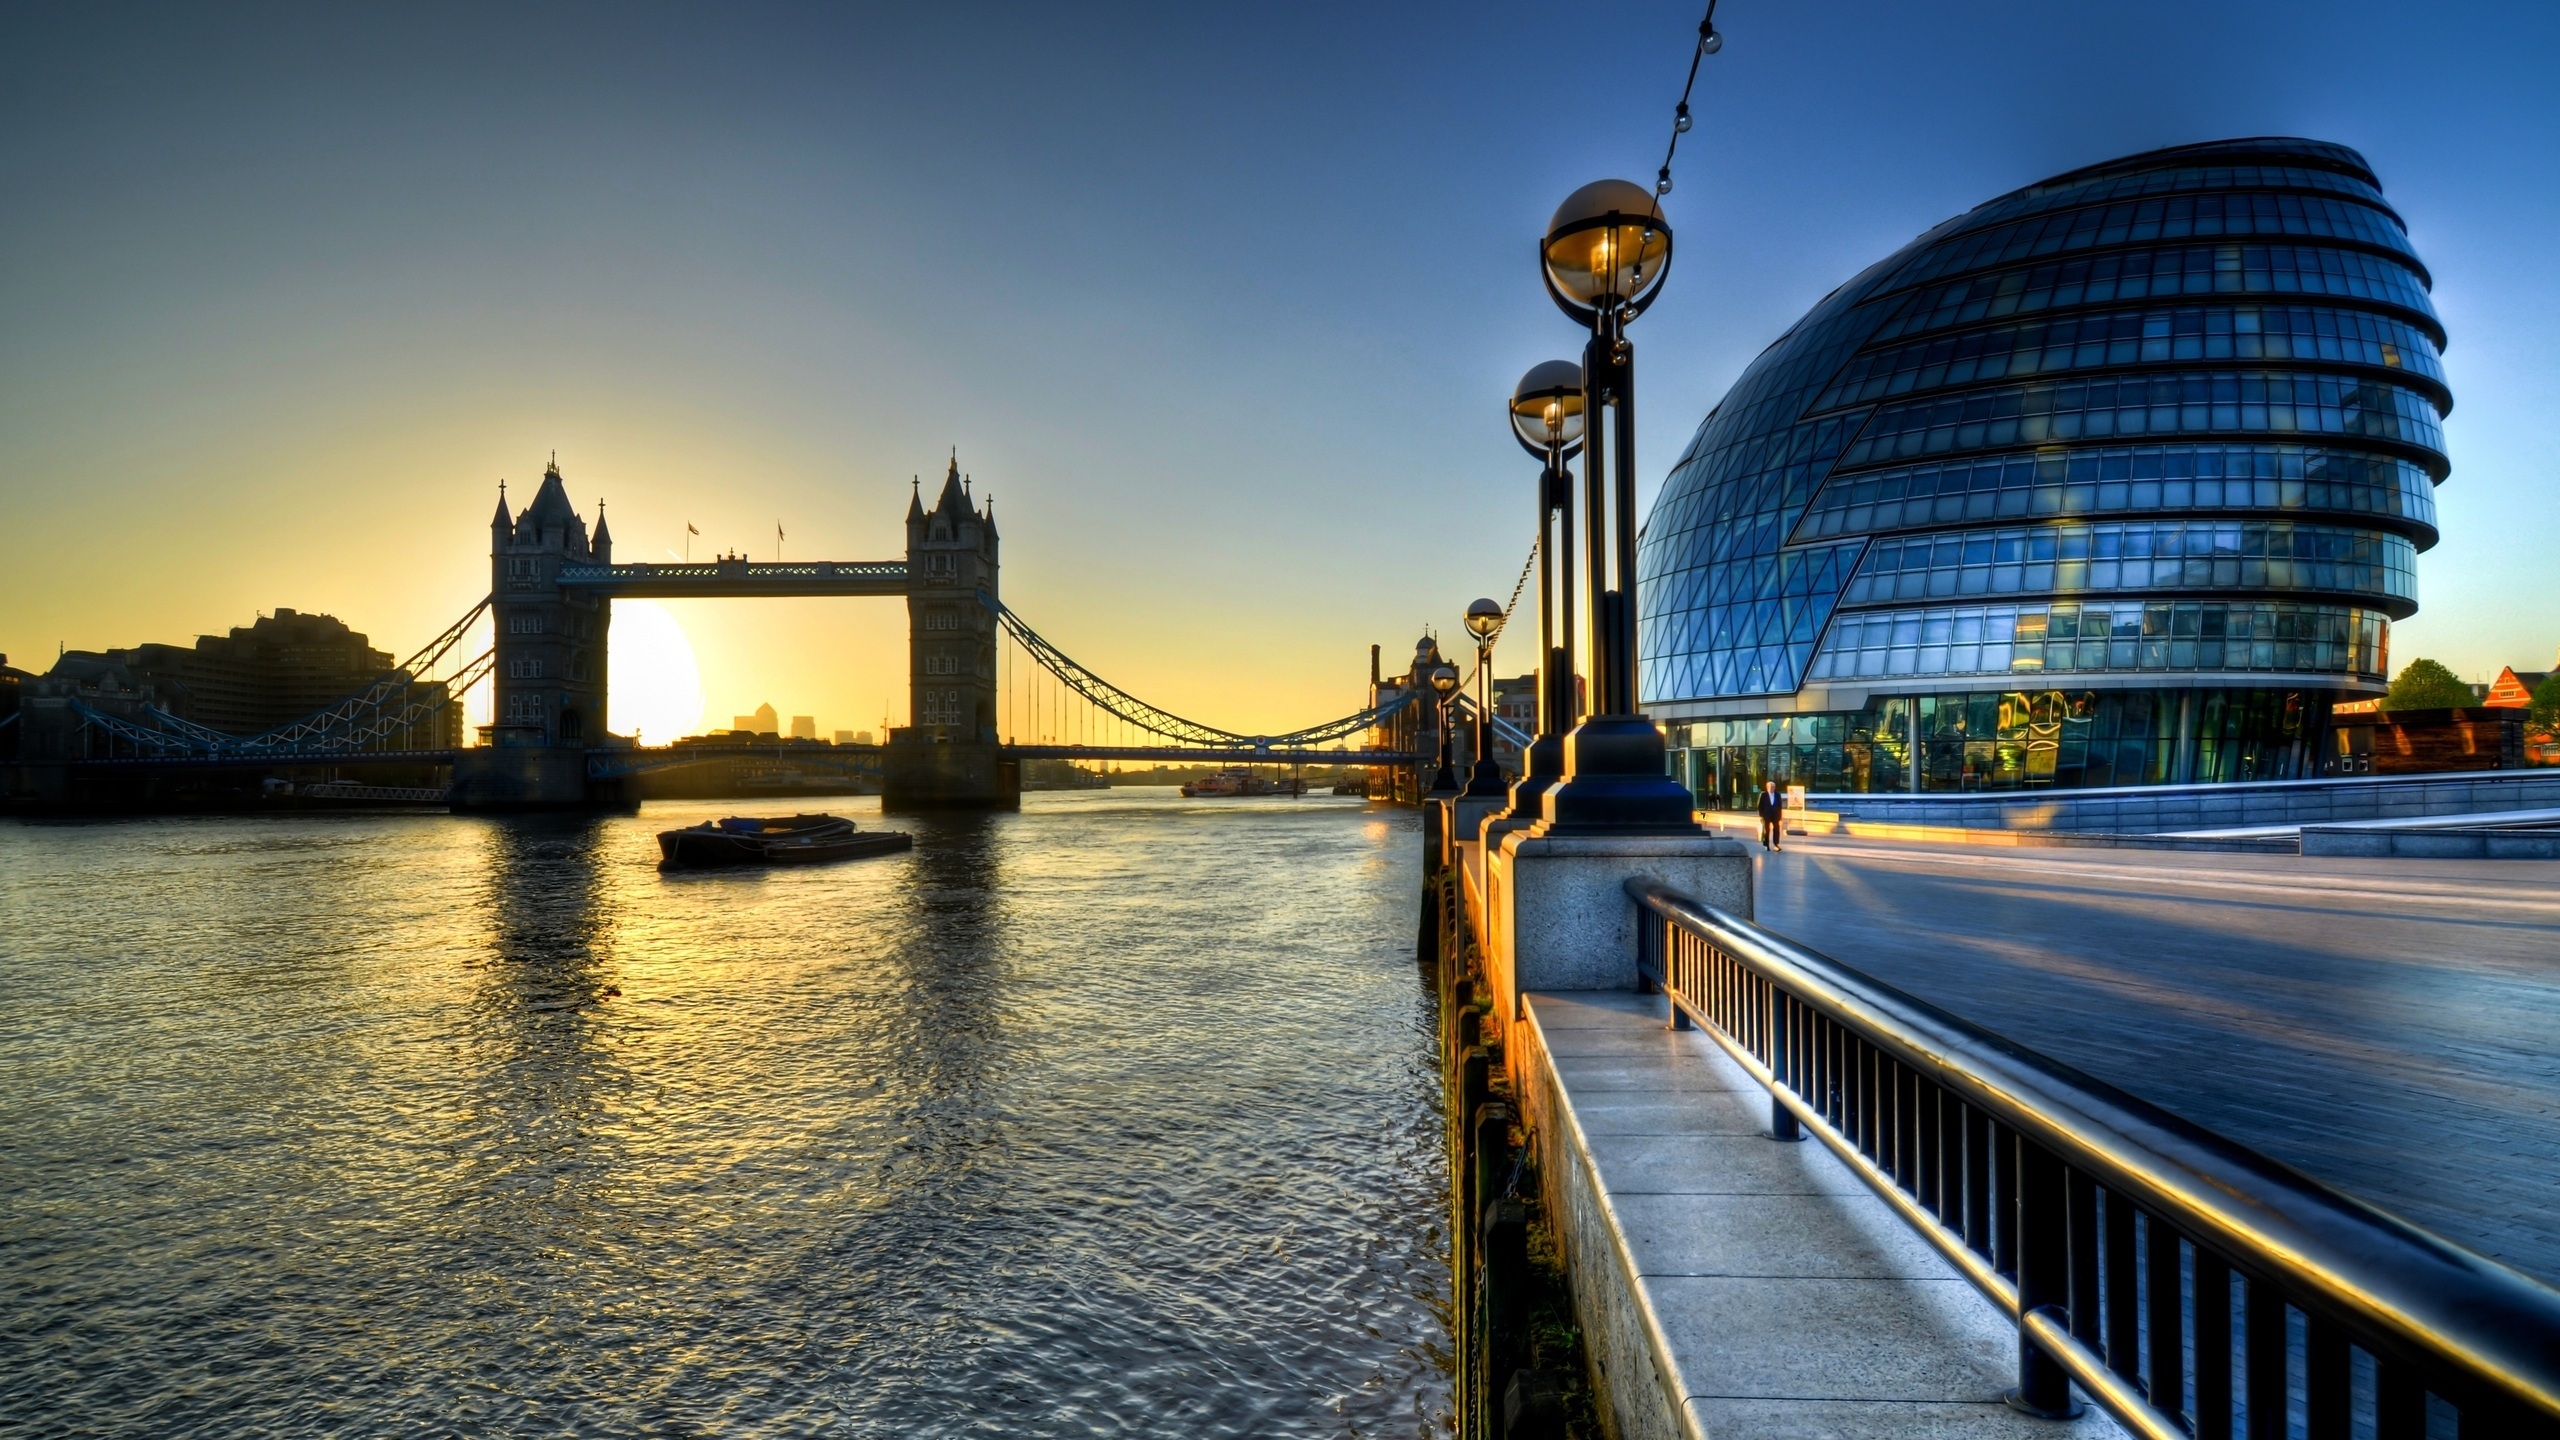 HDR London Tower Bridge for 2560x1440 HDTV resolution